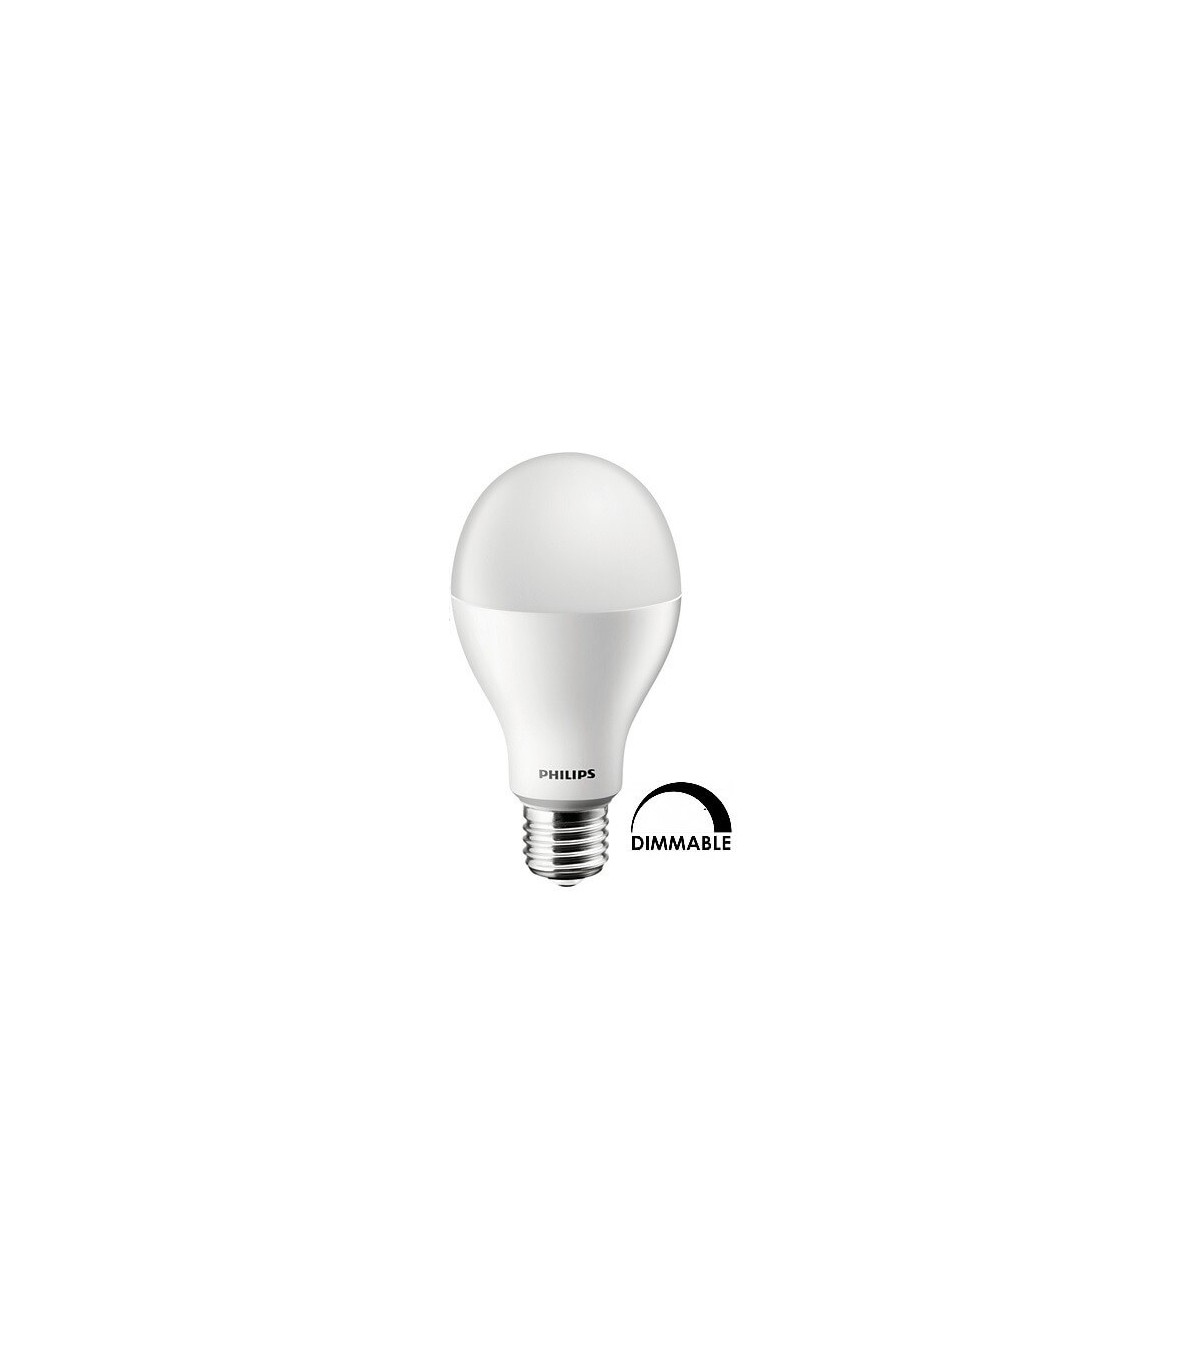 OSRAM Ampoule LED E27 230V 11W(=100W) 1521lm 2700°K globe